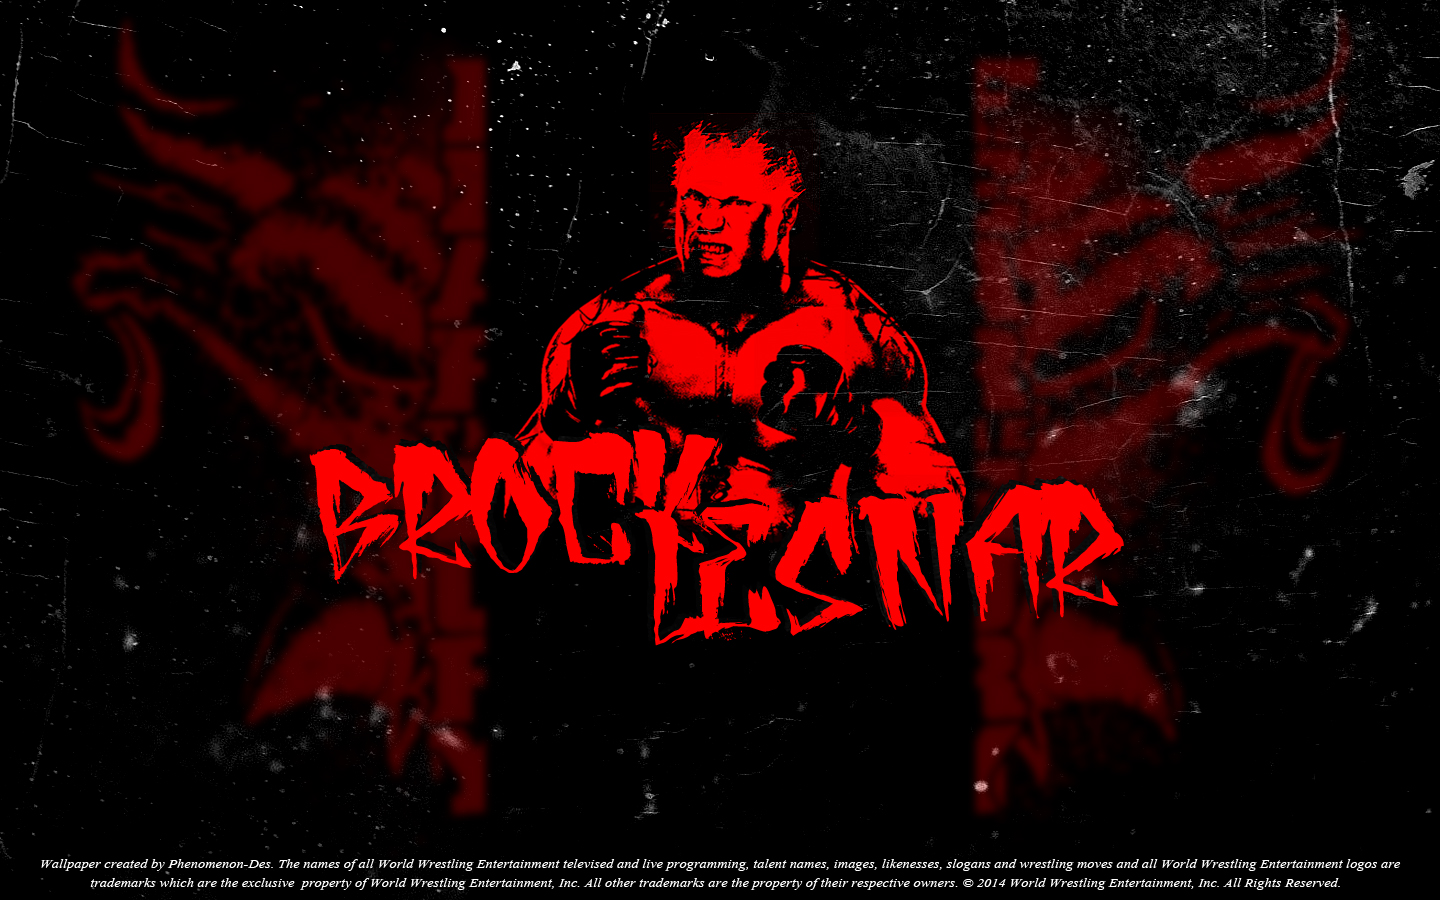 Wwe Brock Lesnar Wallpaper By Phenomenon Des Fan Art Other